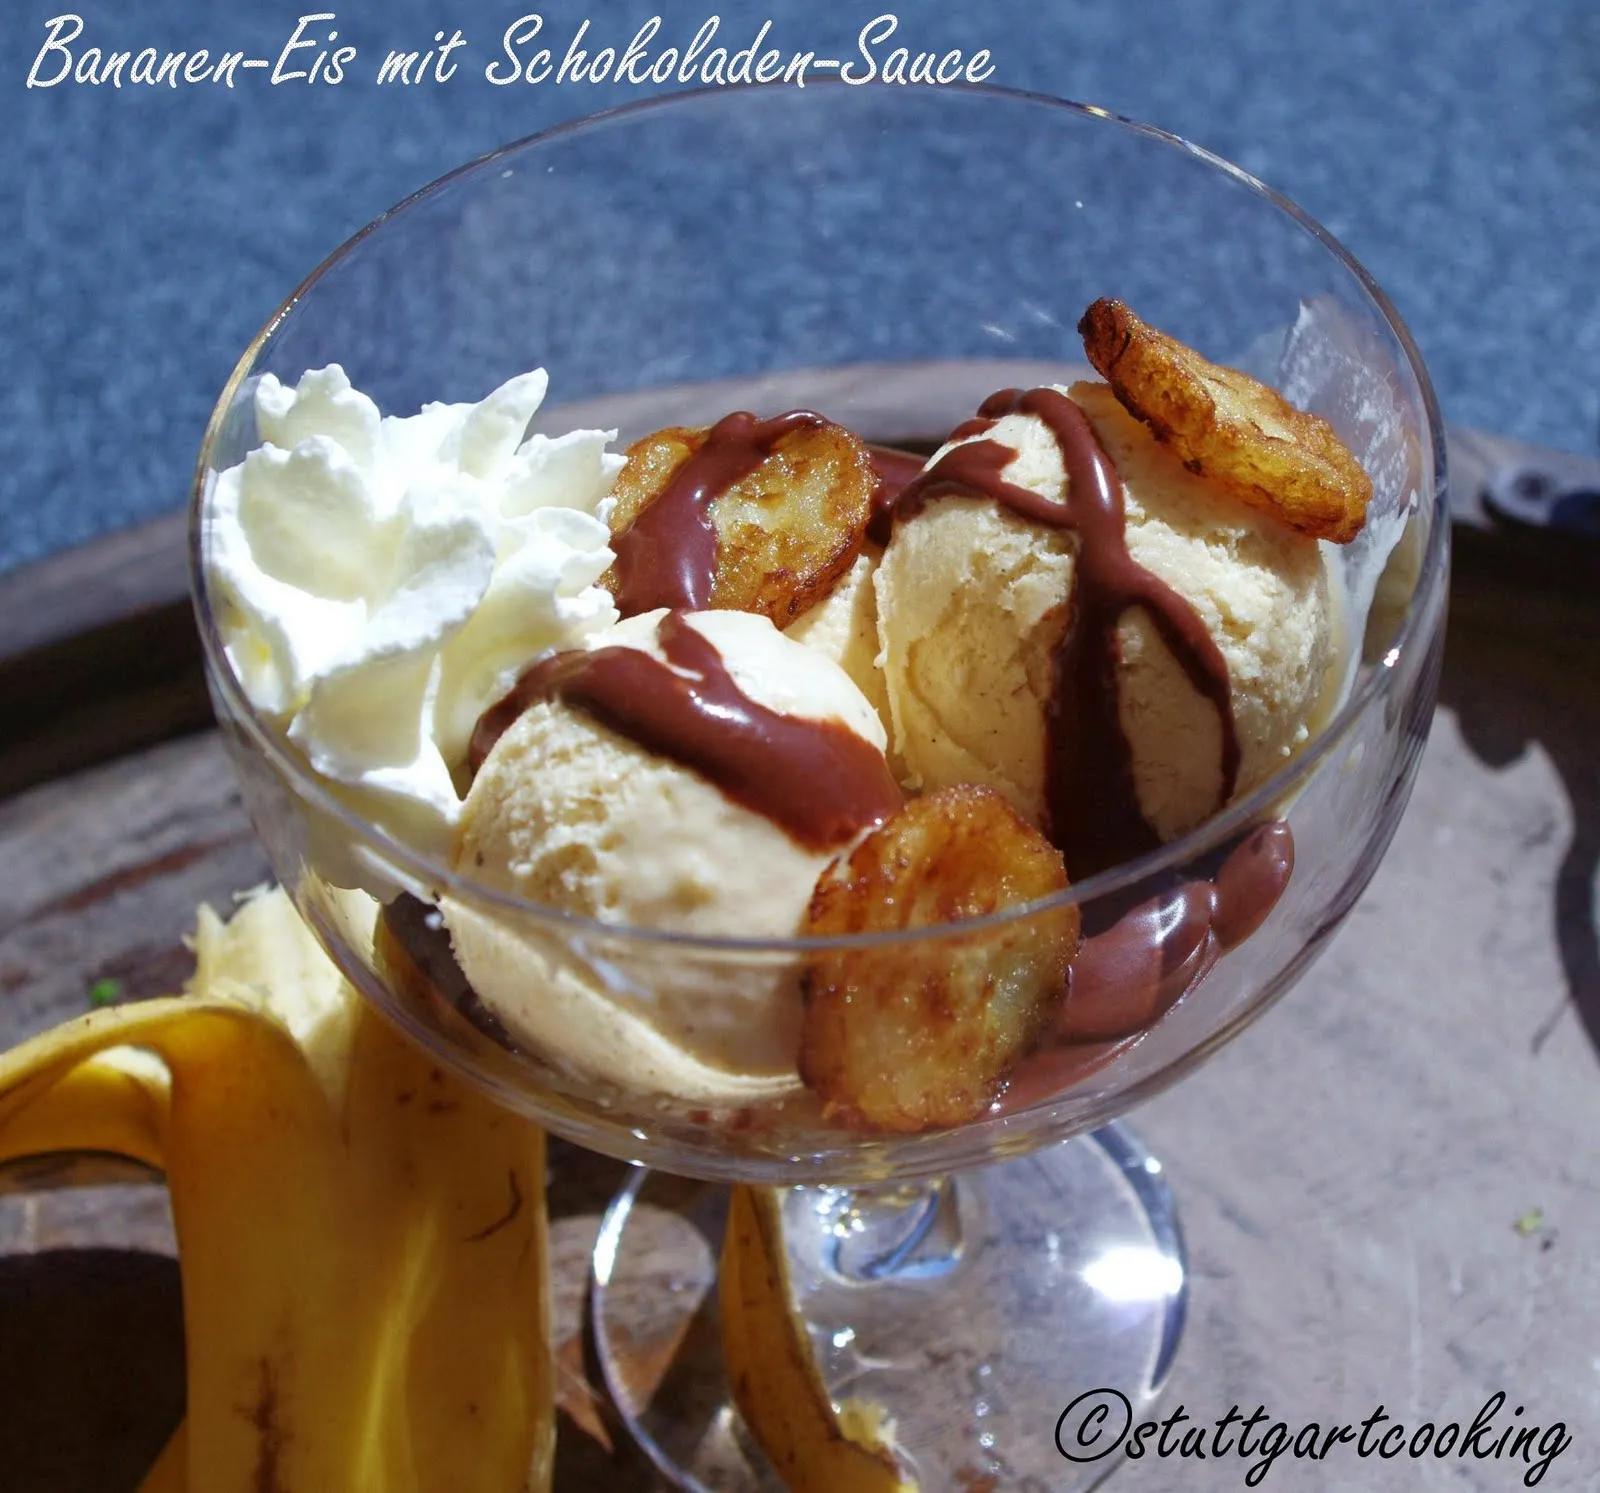 stuttgartcooking: Bananen-Eis mit Schokoladen-Sauce